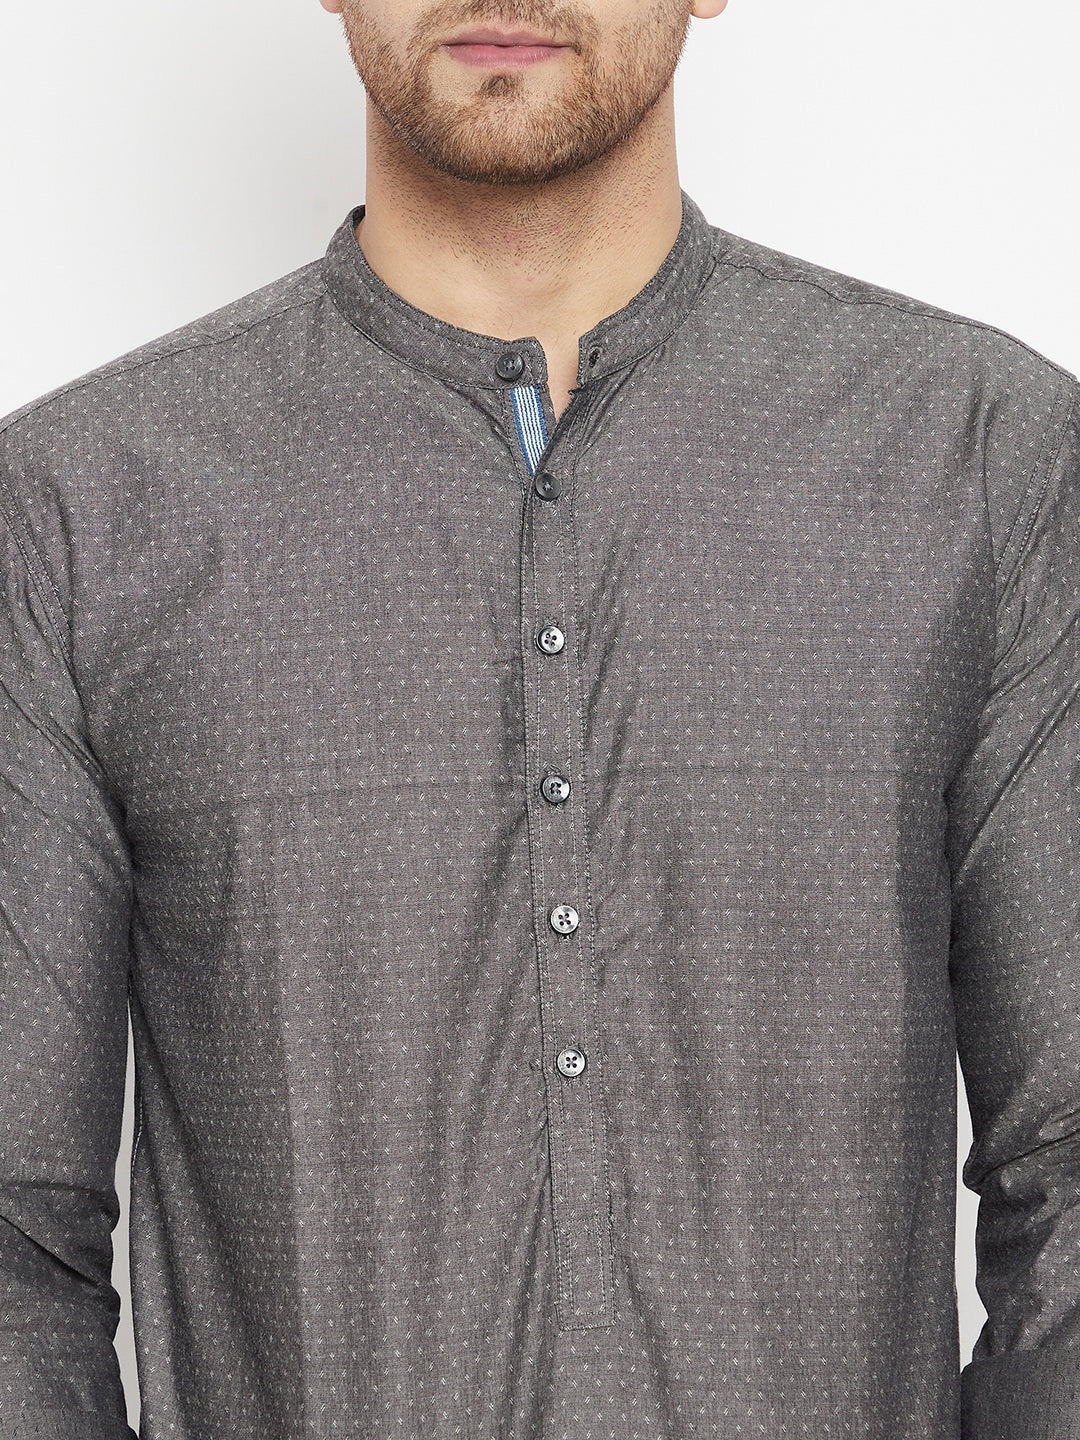 Men's Grey Color Short Kurta with Band Collar - Even Apparels